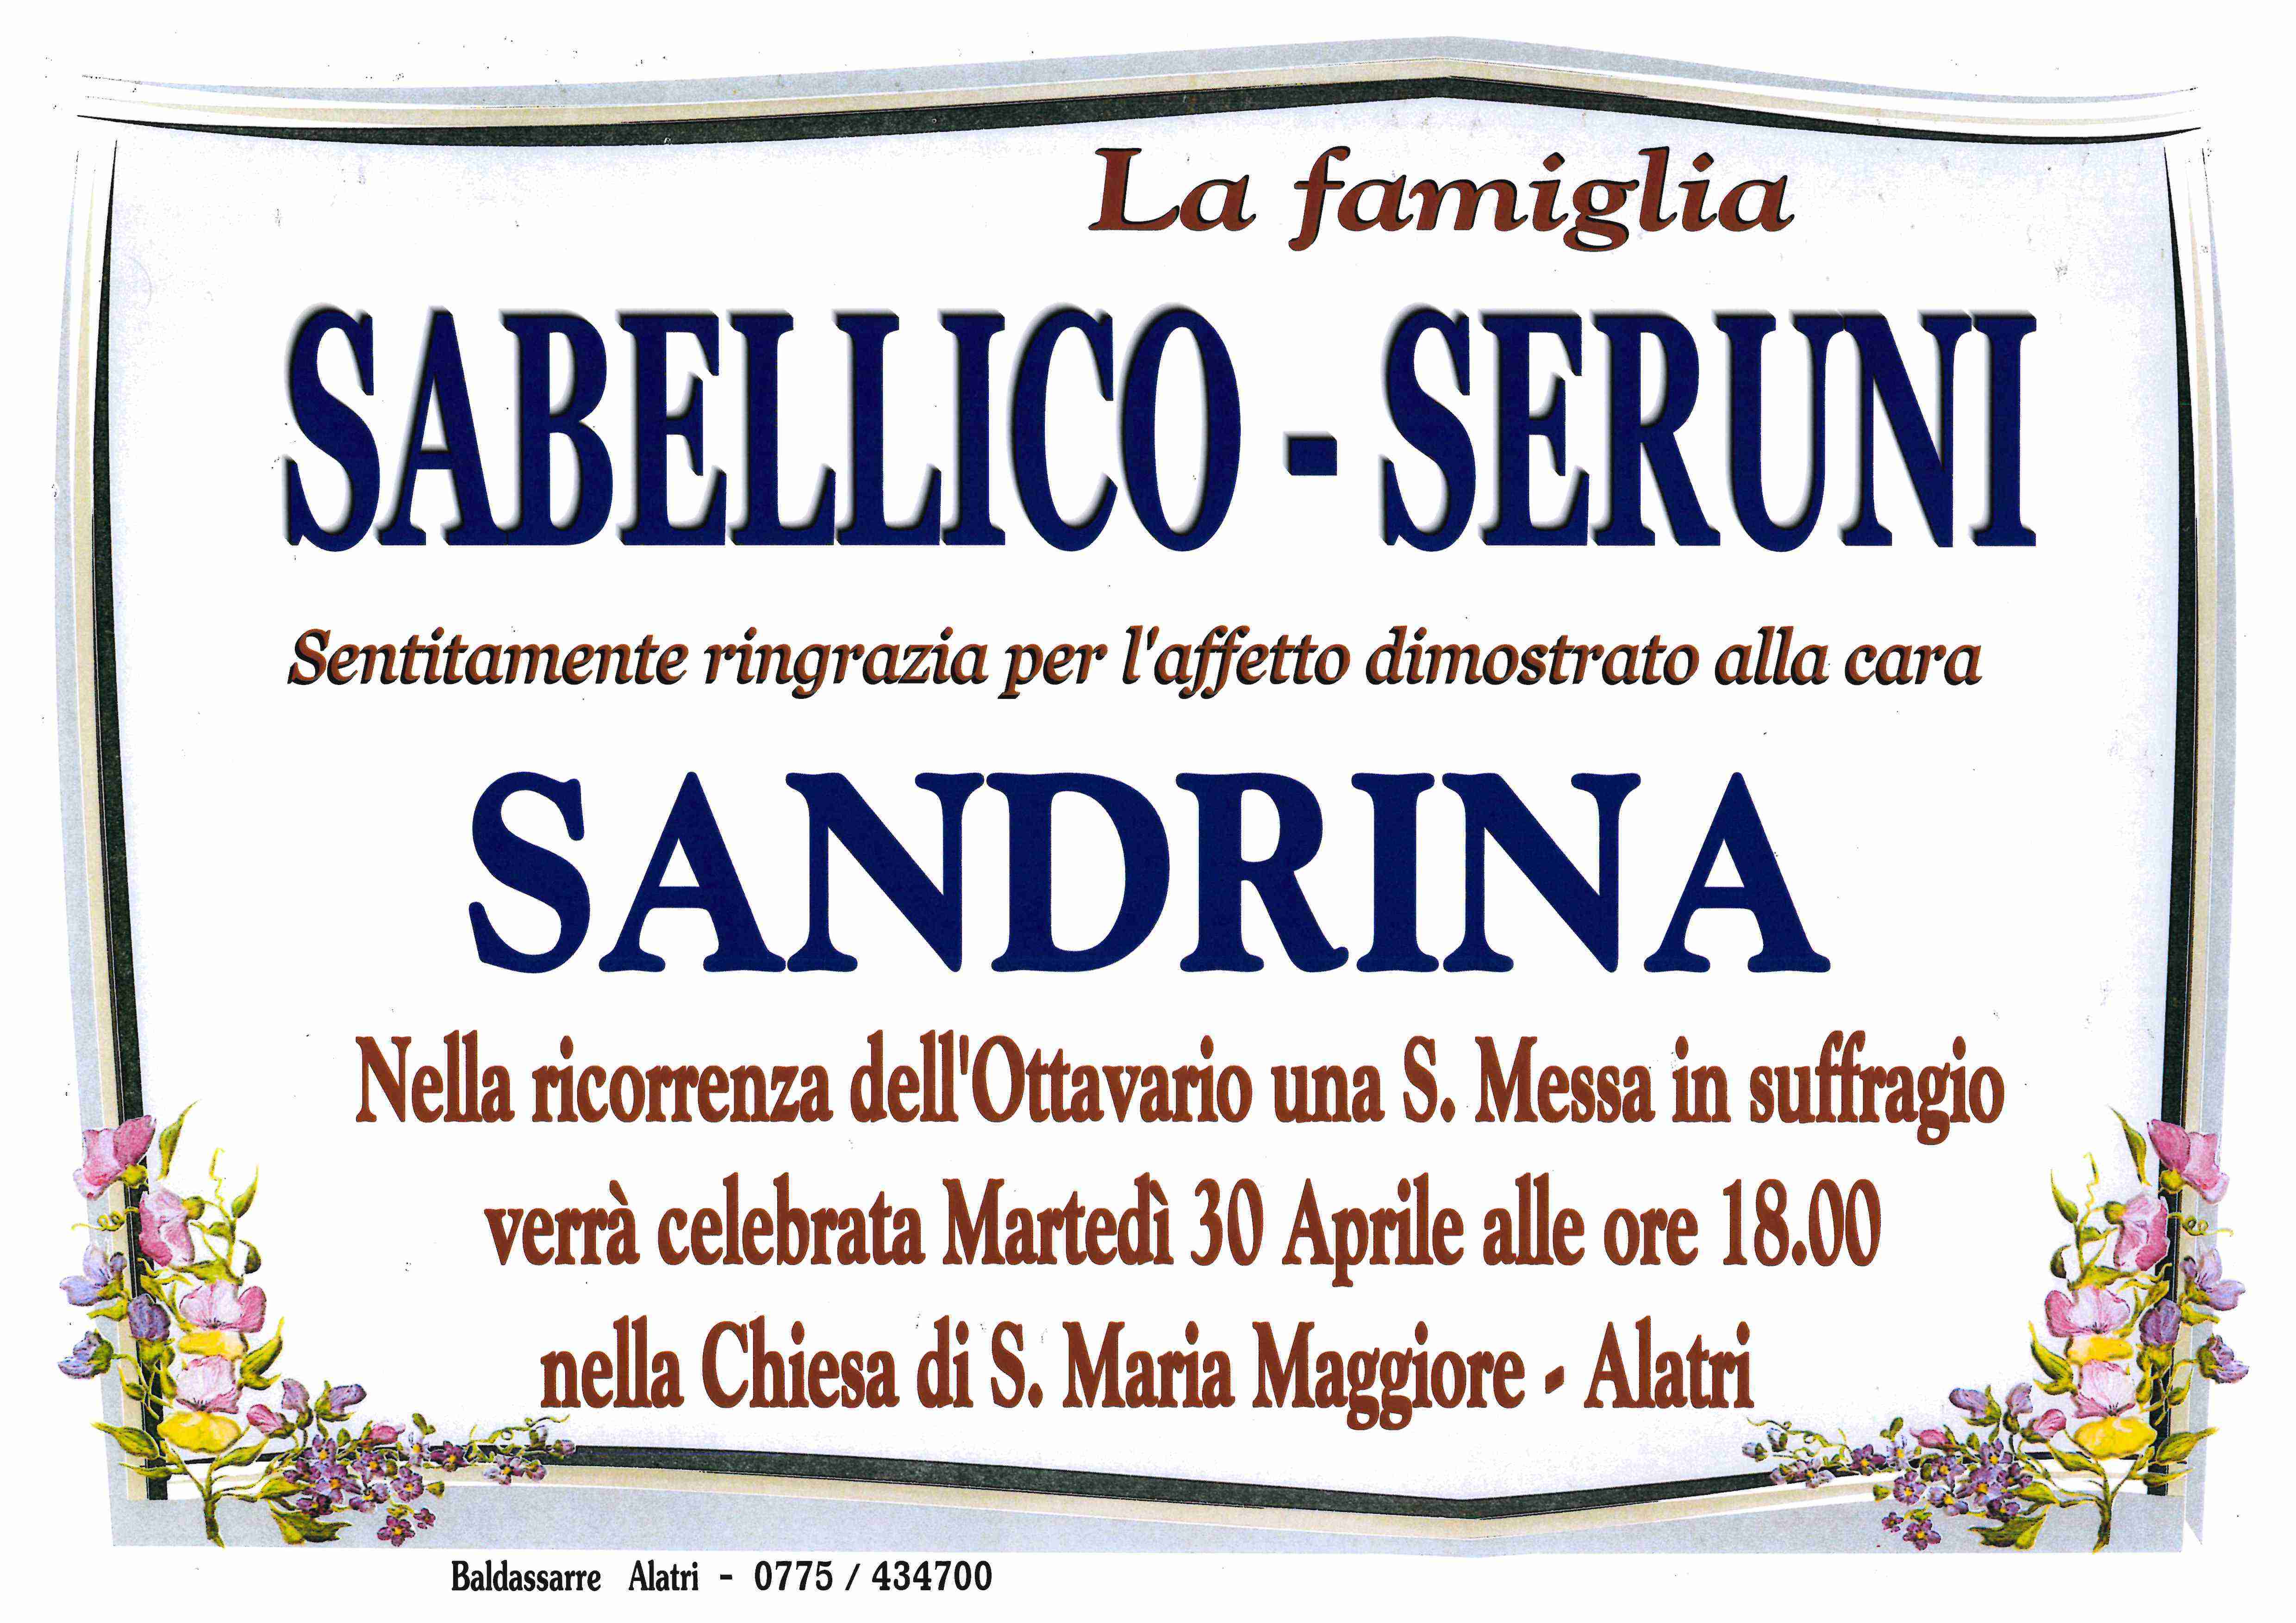 Sandrina Sabellico